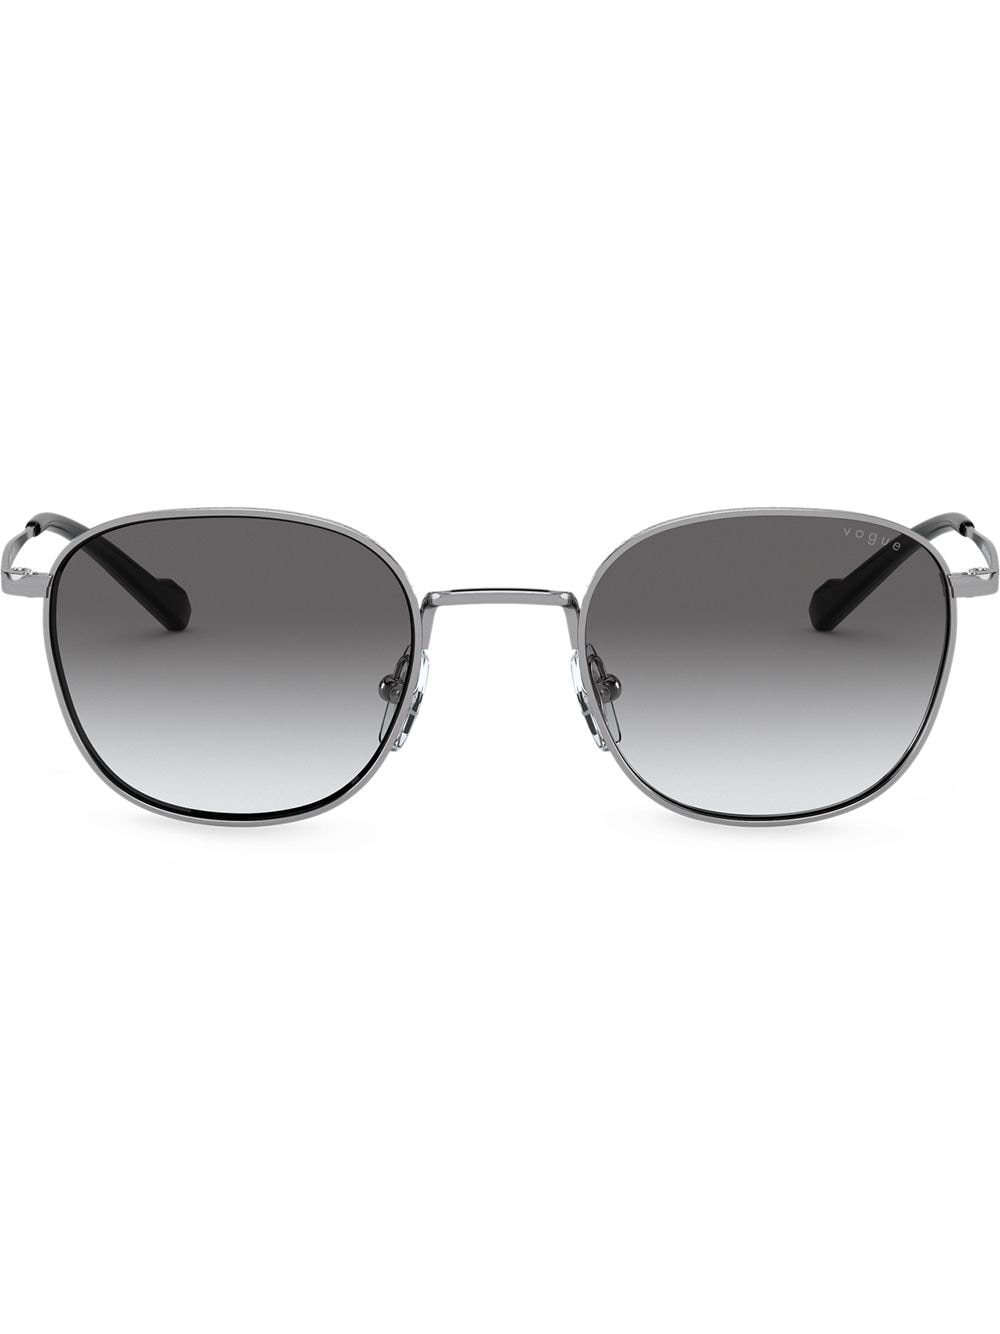 Vogue Eyewear Aviator Frame Sunglasses In Silver